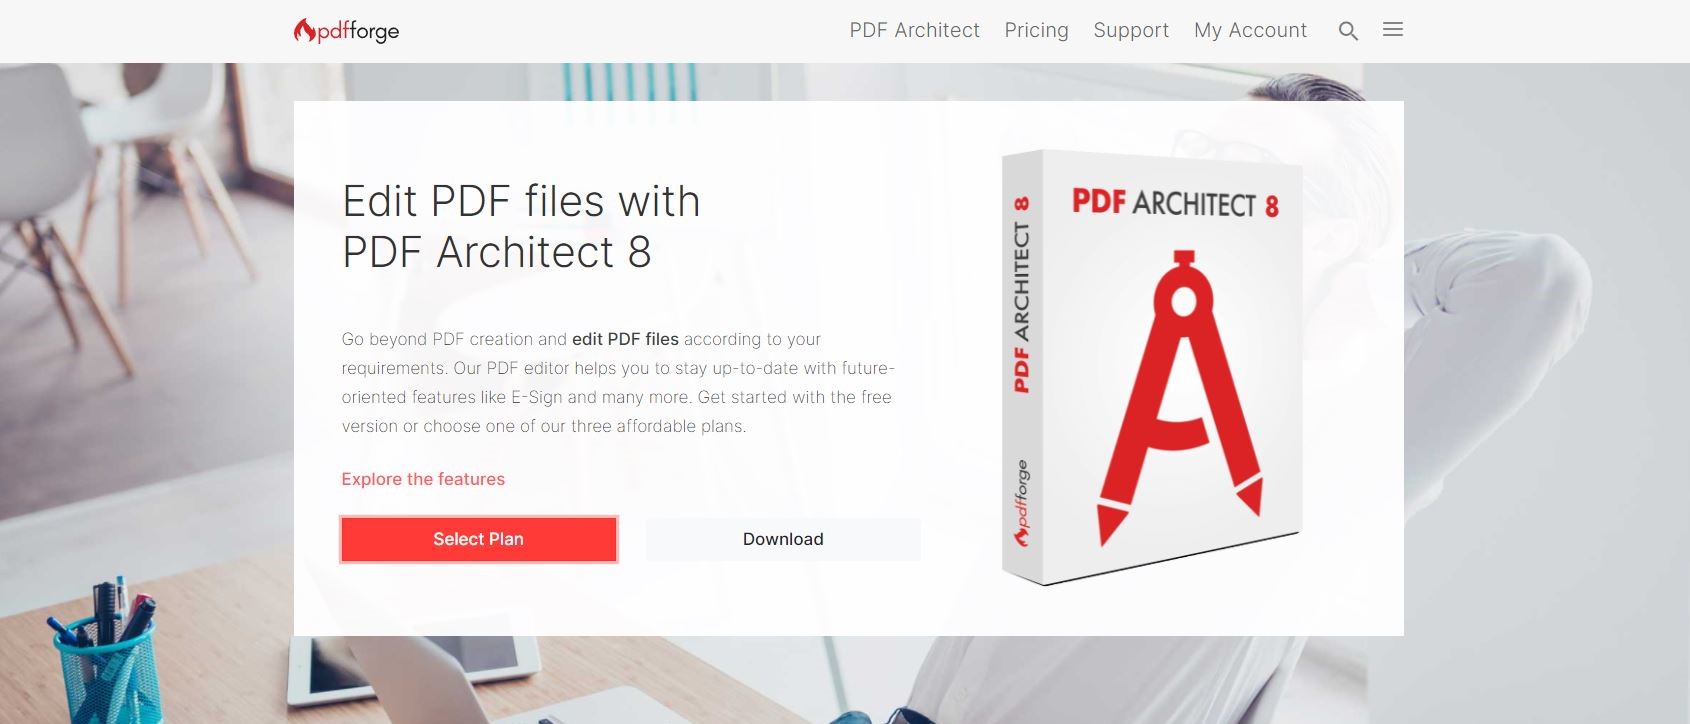 instal PDF Architect Pro 9.0.45.21322